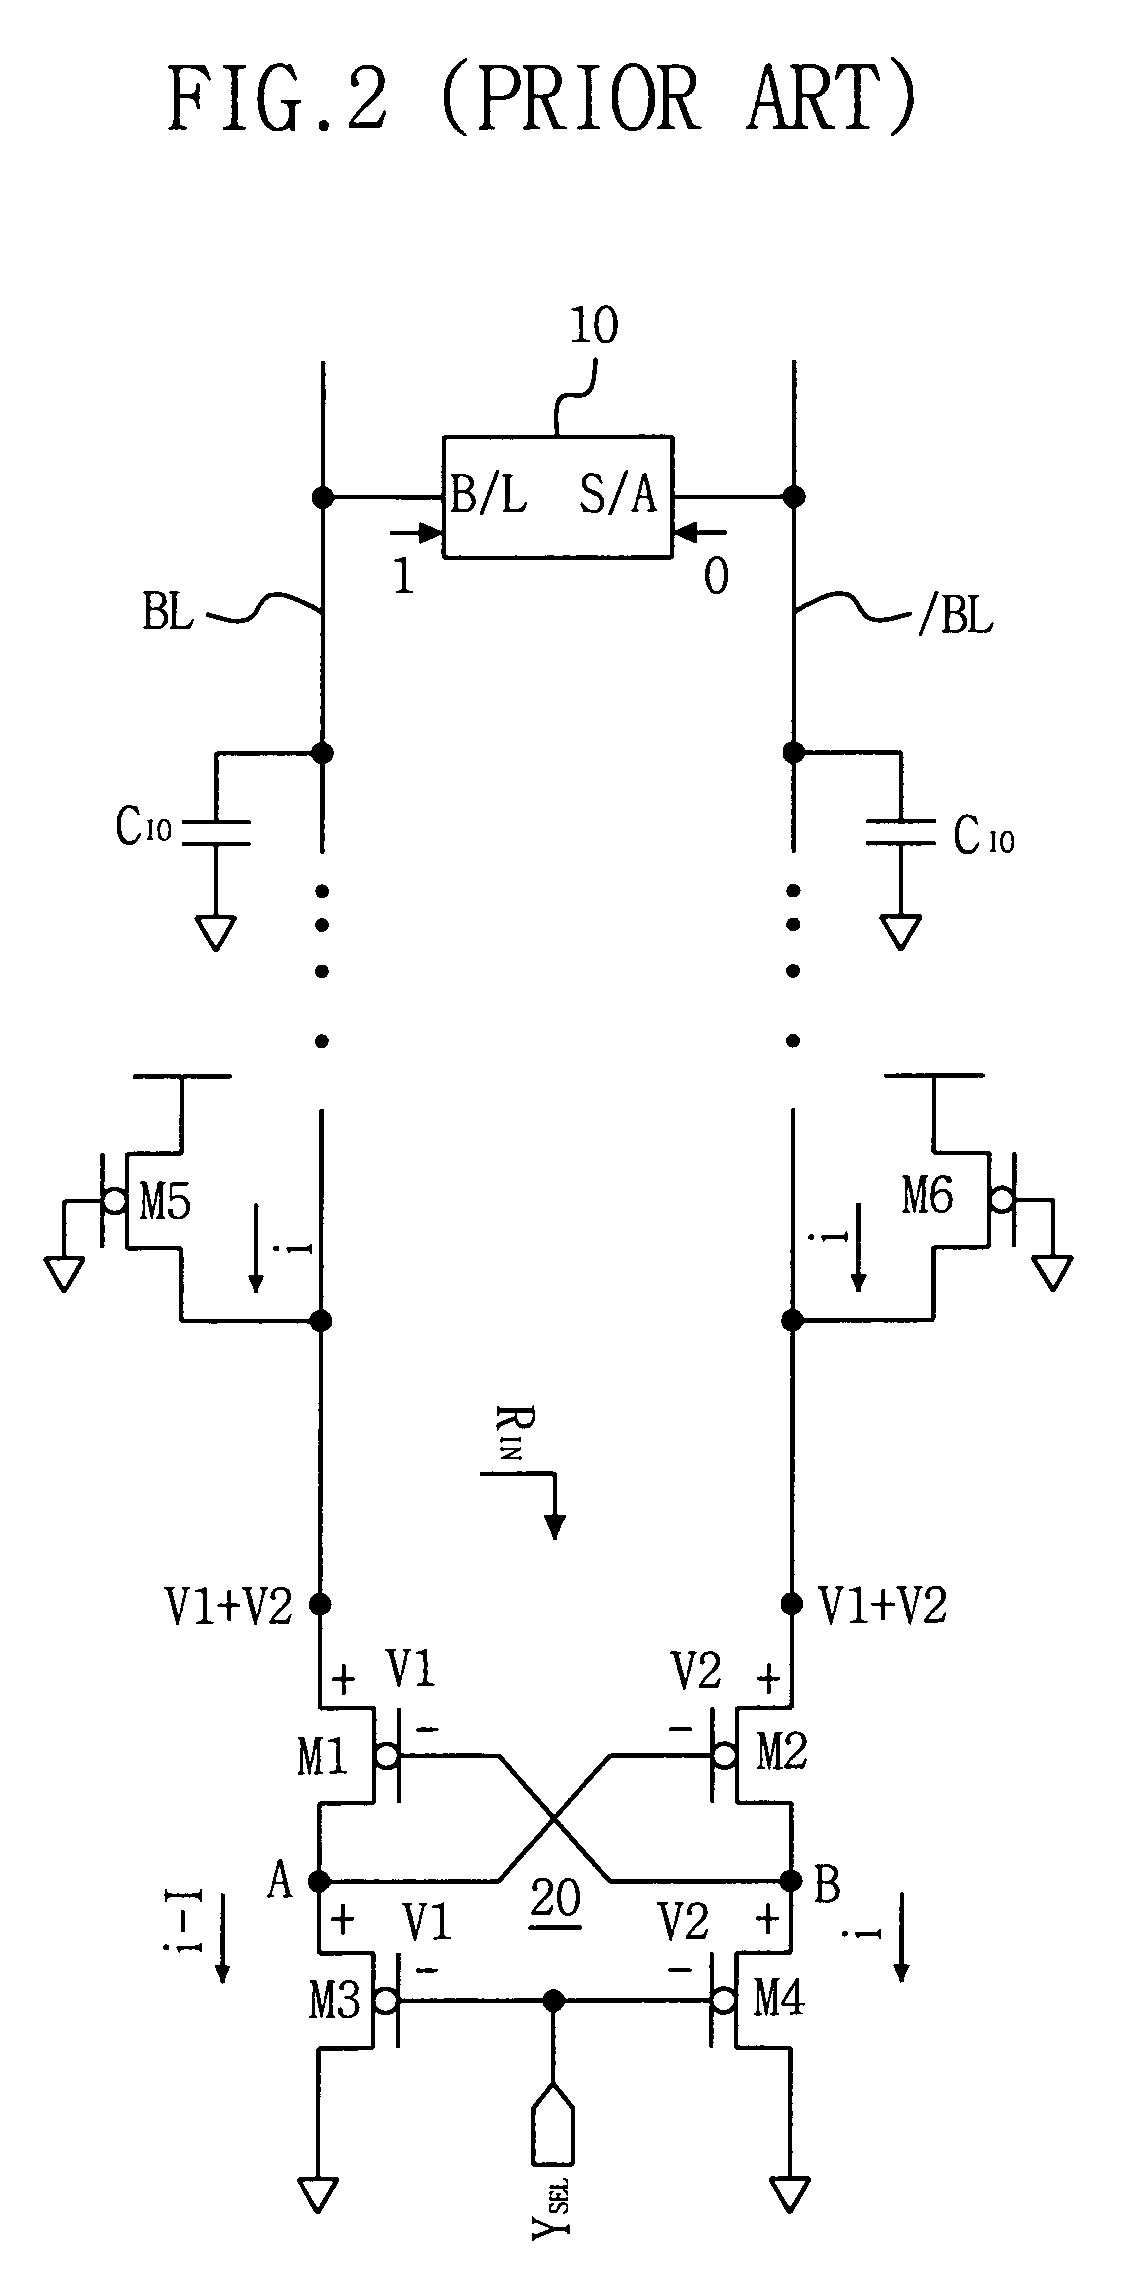 Current sense amplifier circuits having a bias voltage node for adjusting input resistance